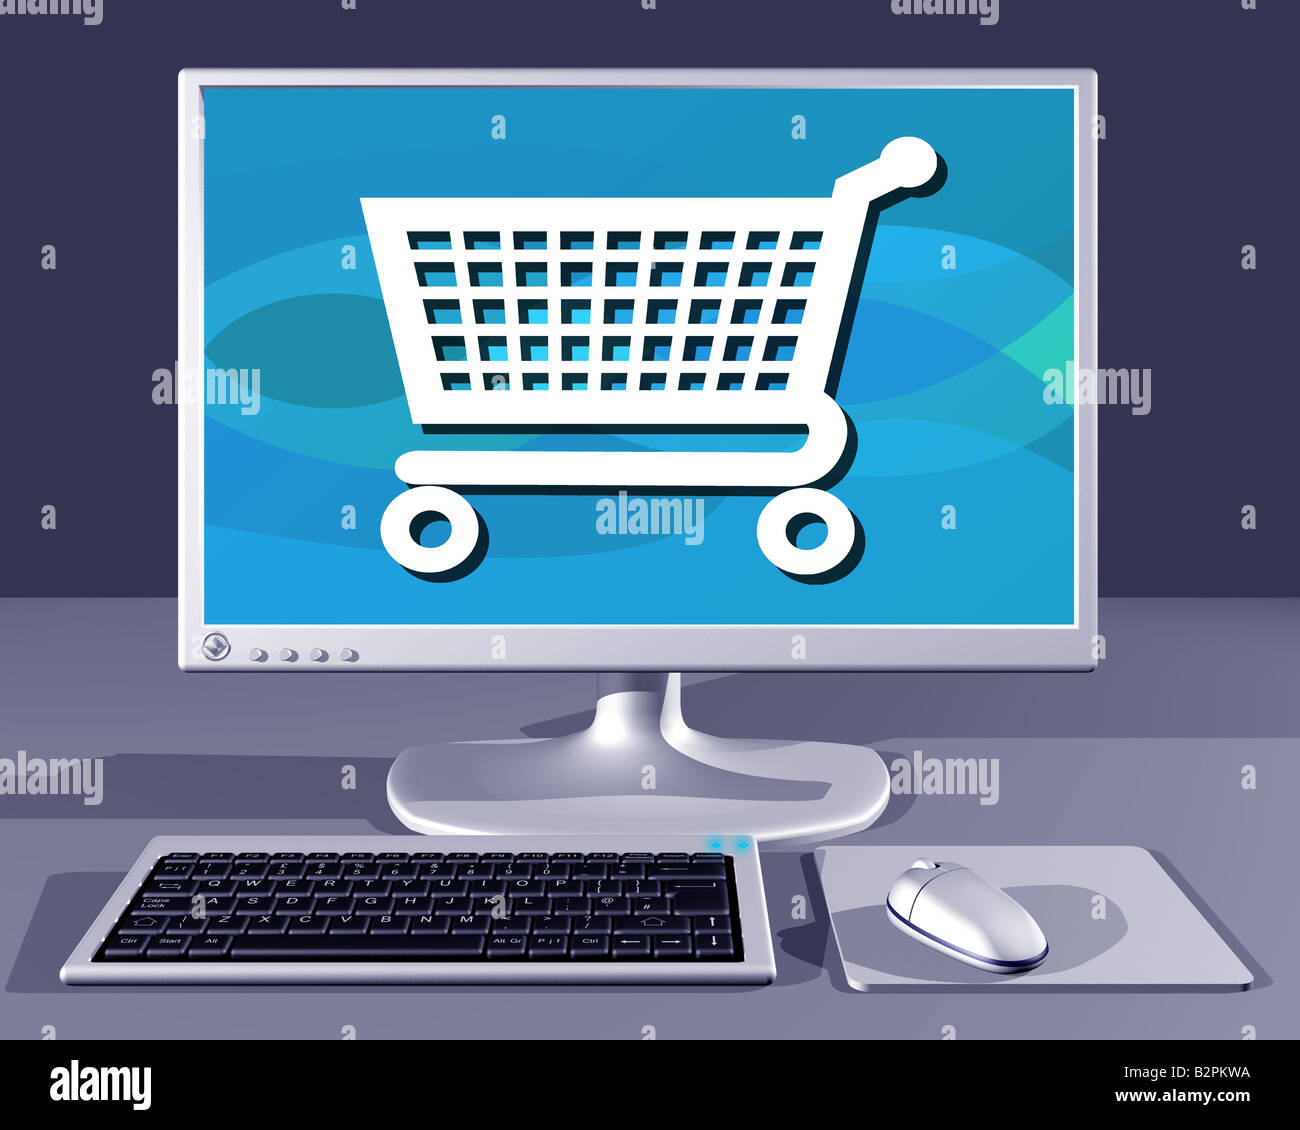 Illustration of Desktop computer showing Internet shopping Stock Photo